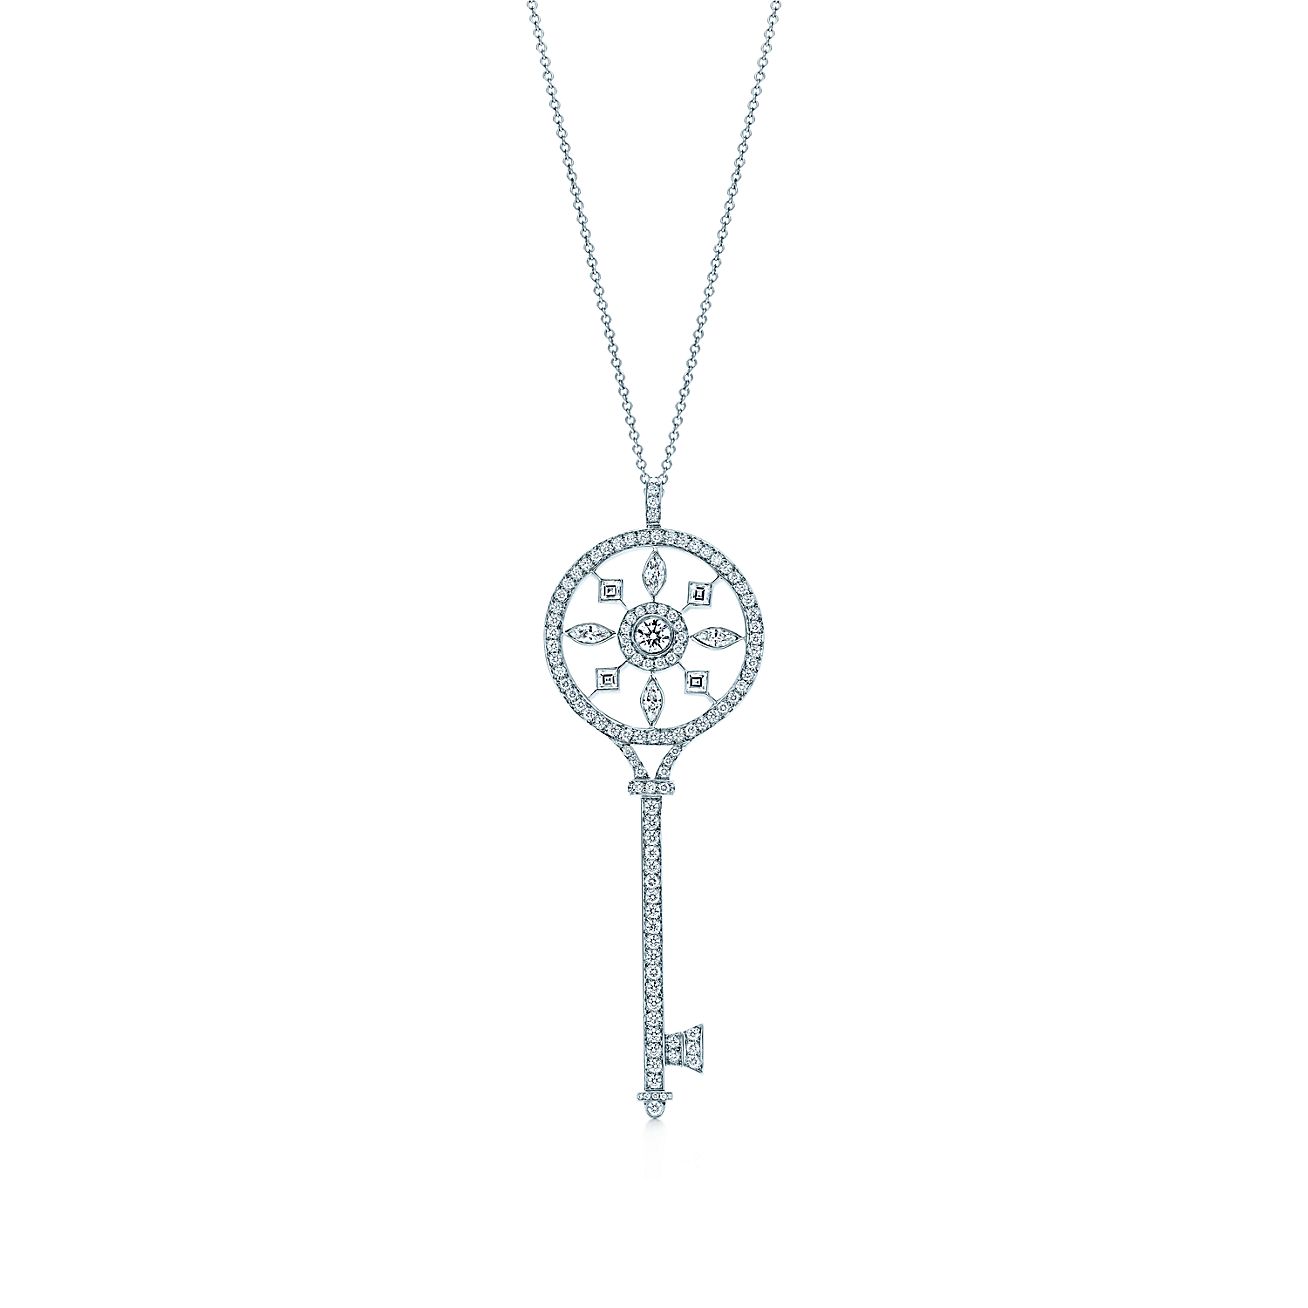 Tiffany Keys round kaleidoscope key 